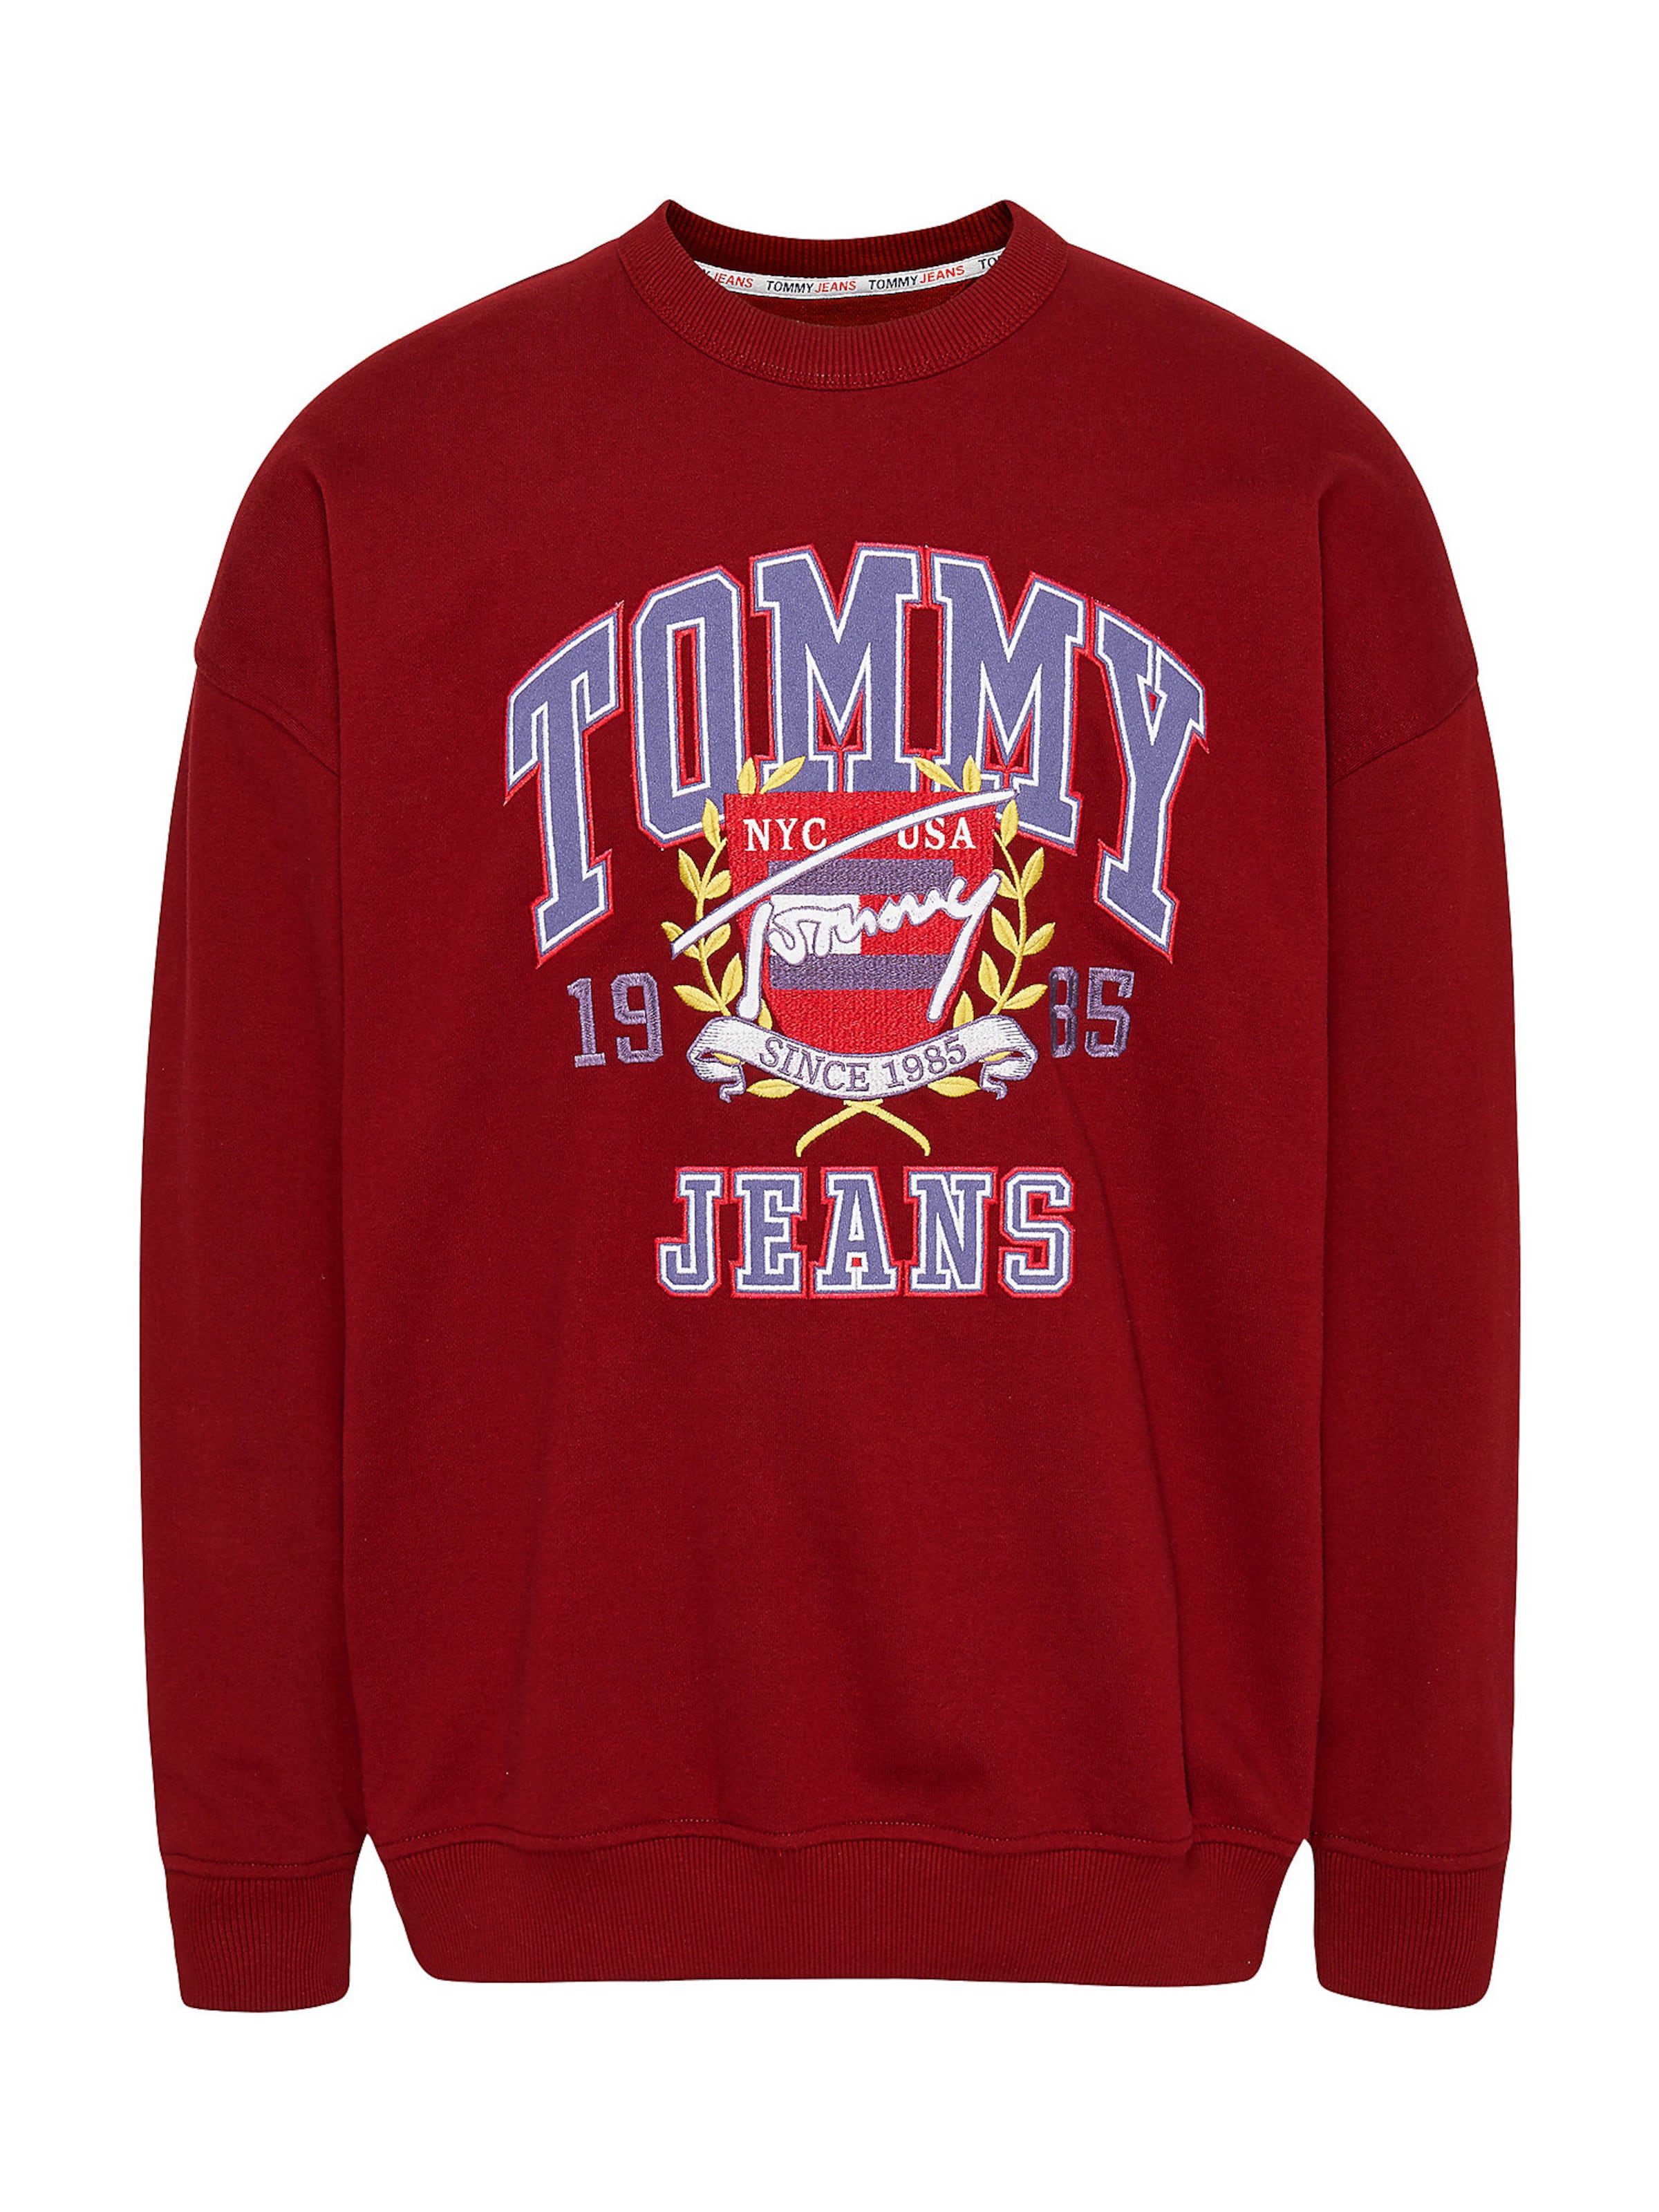 Männer Sweat Tommy Jeans Sweatshirt 'College Crew' in Rot, Dunkelrot - QP35217